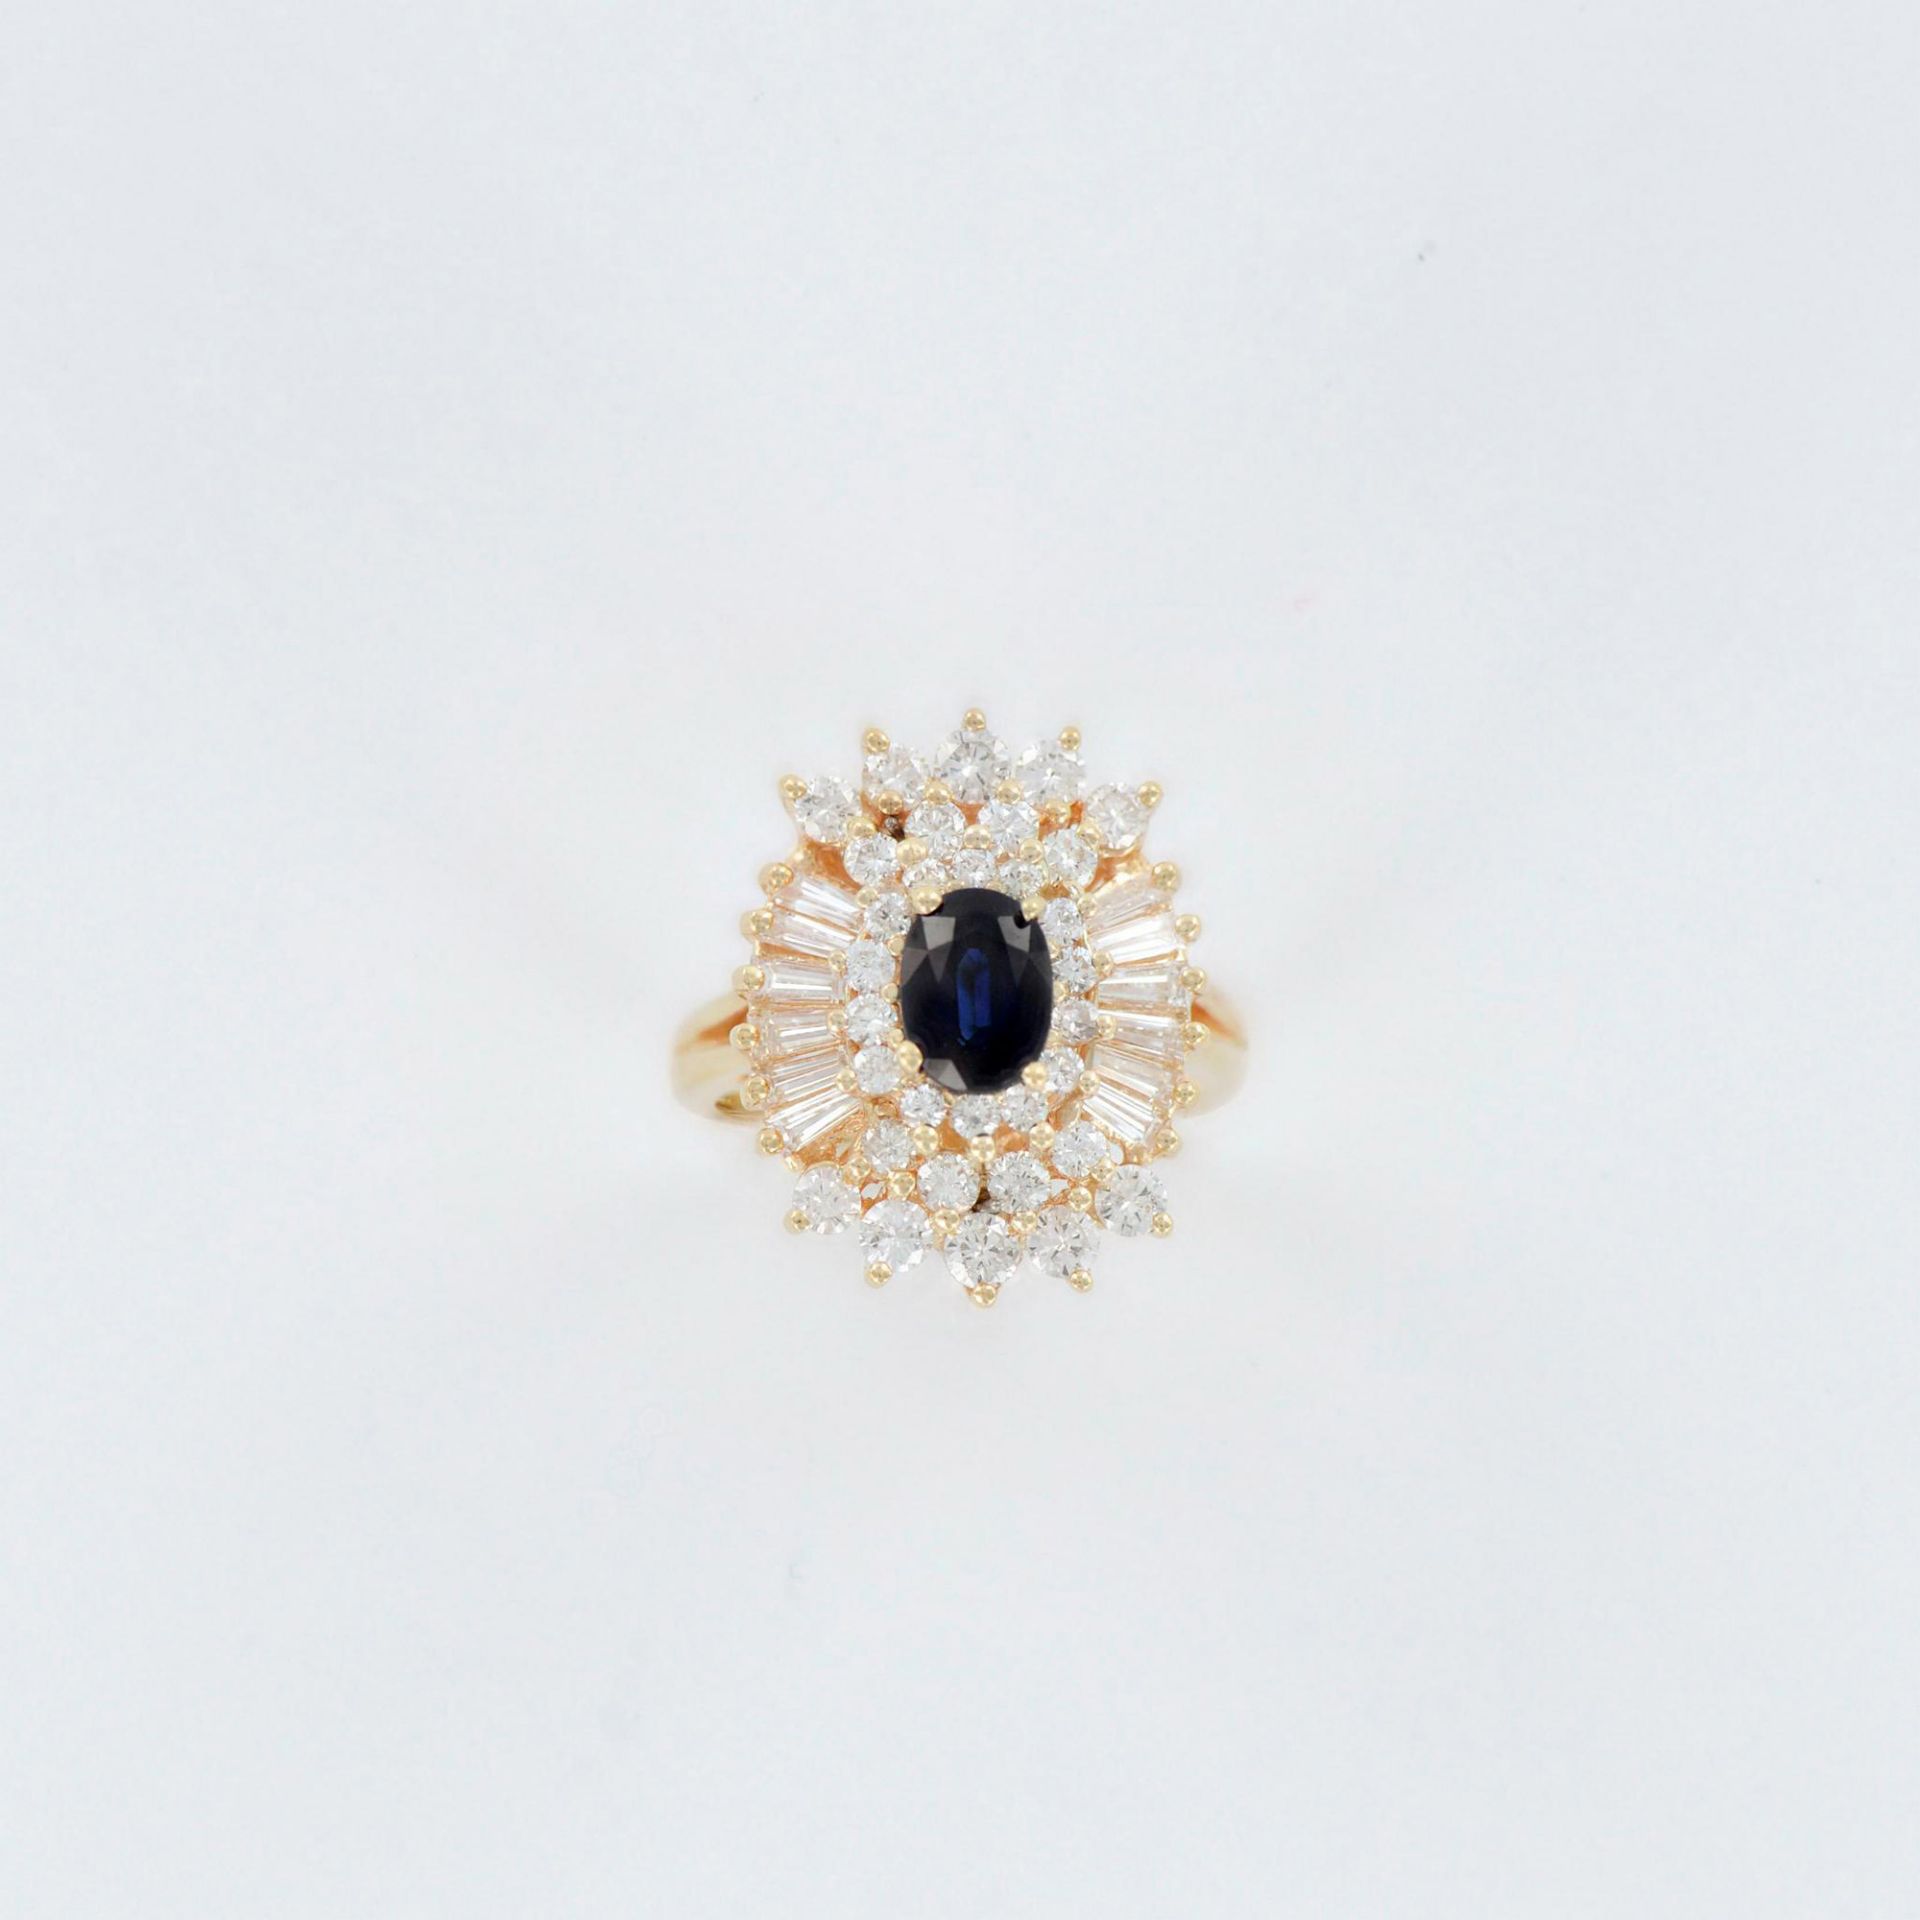 Harold Freeman 14K Yellow Gold, Sapphire, and Diamond Ring - Image 4 of 6